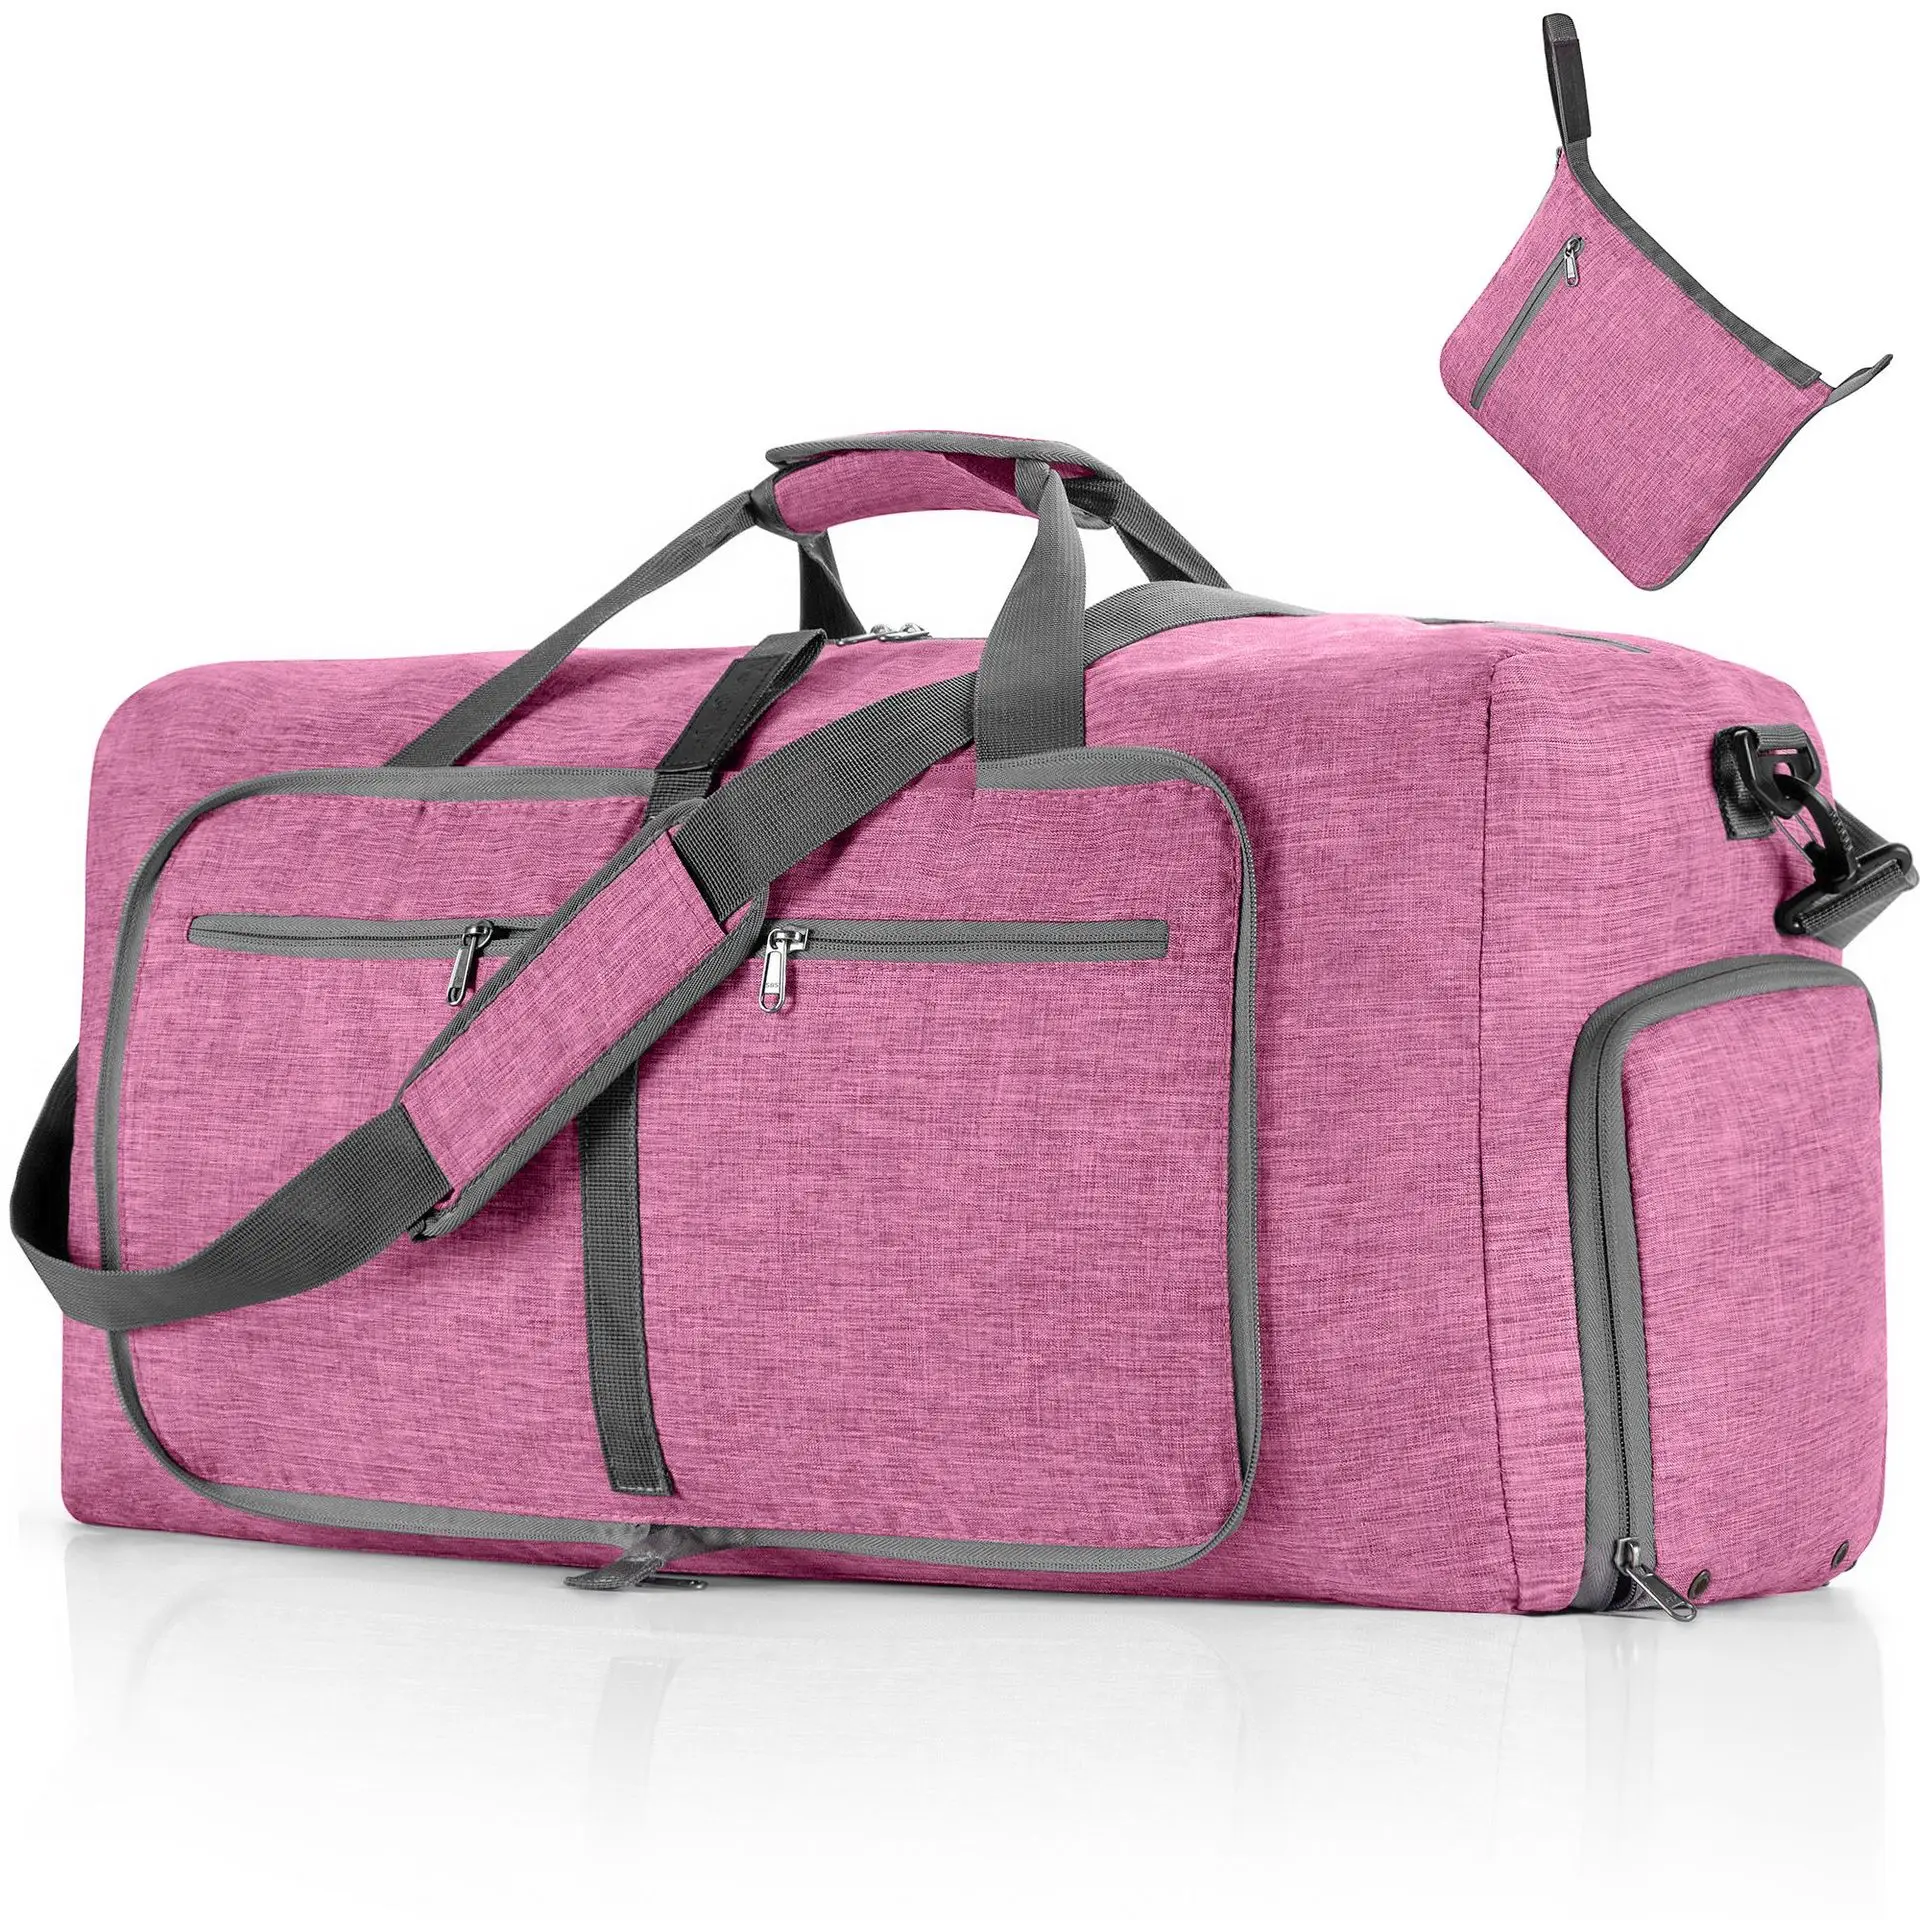 

Oxford Pink Yoga Tote Duffel Travel Bags For Women Large Capacity Luggage Women Handbags Fashion Duffle Bag Travel Storage Bags